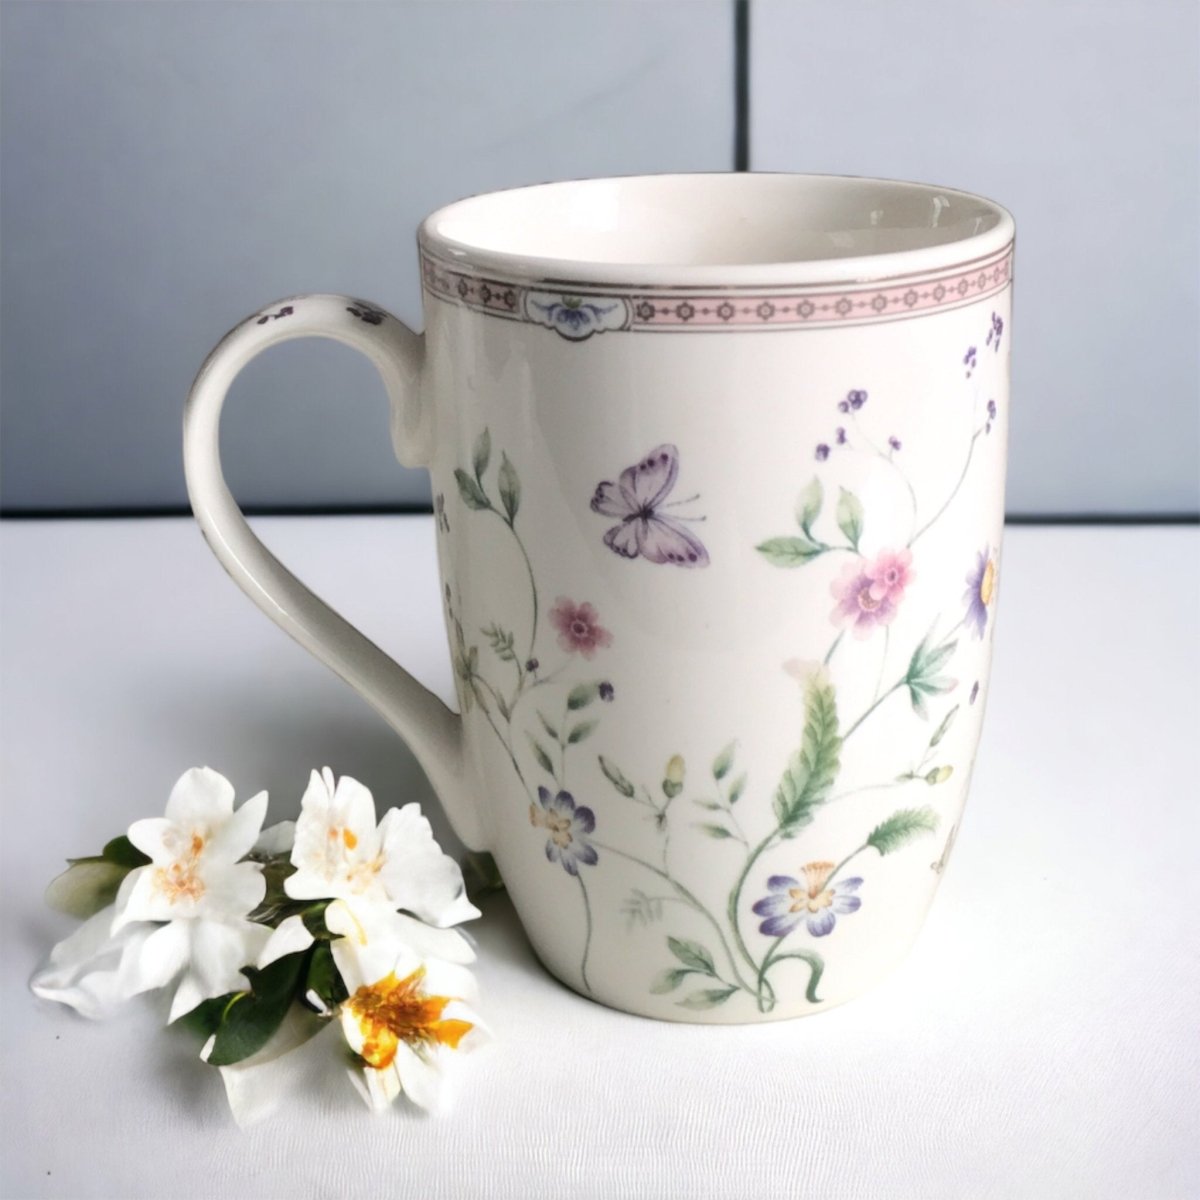 Kezevel Porcelain Large Mugs White - Set of 2 Floral Printed 330 ML Mugs, Serves as Tea Cups, Coffee Cups, Tea Mugs, Coffee Mugs - Kezevel